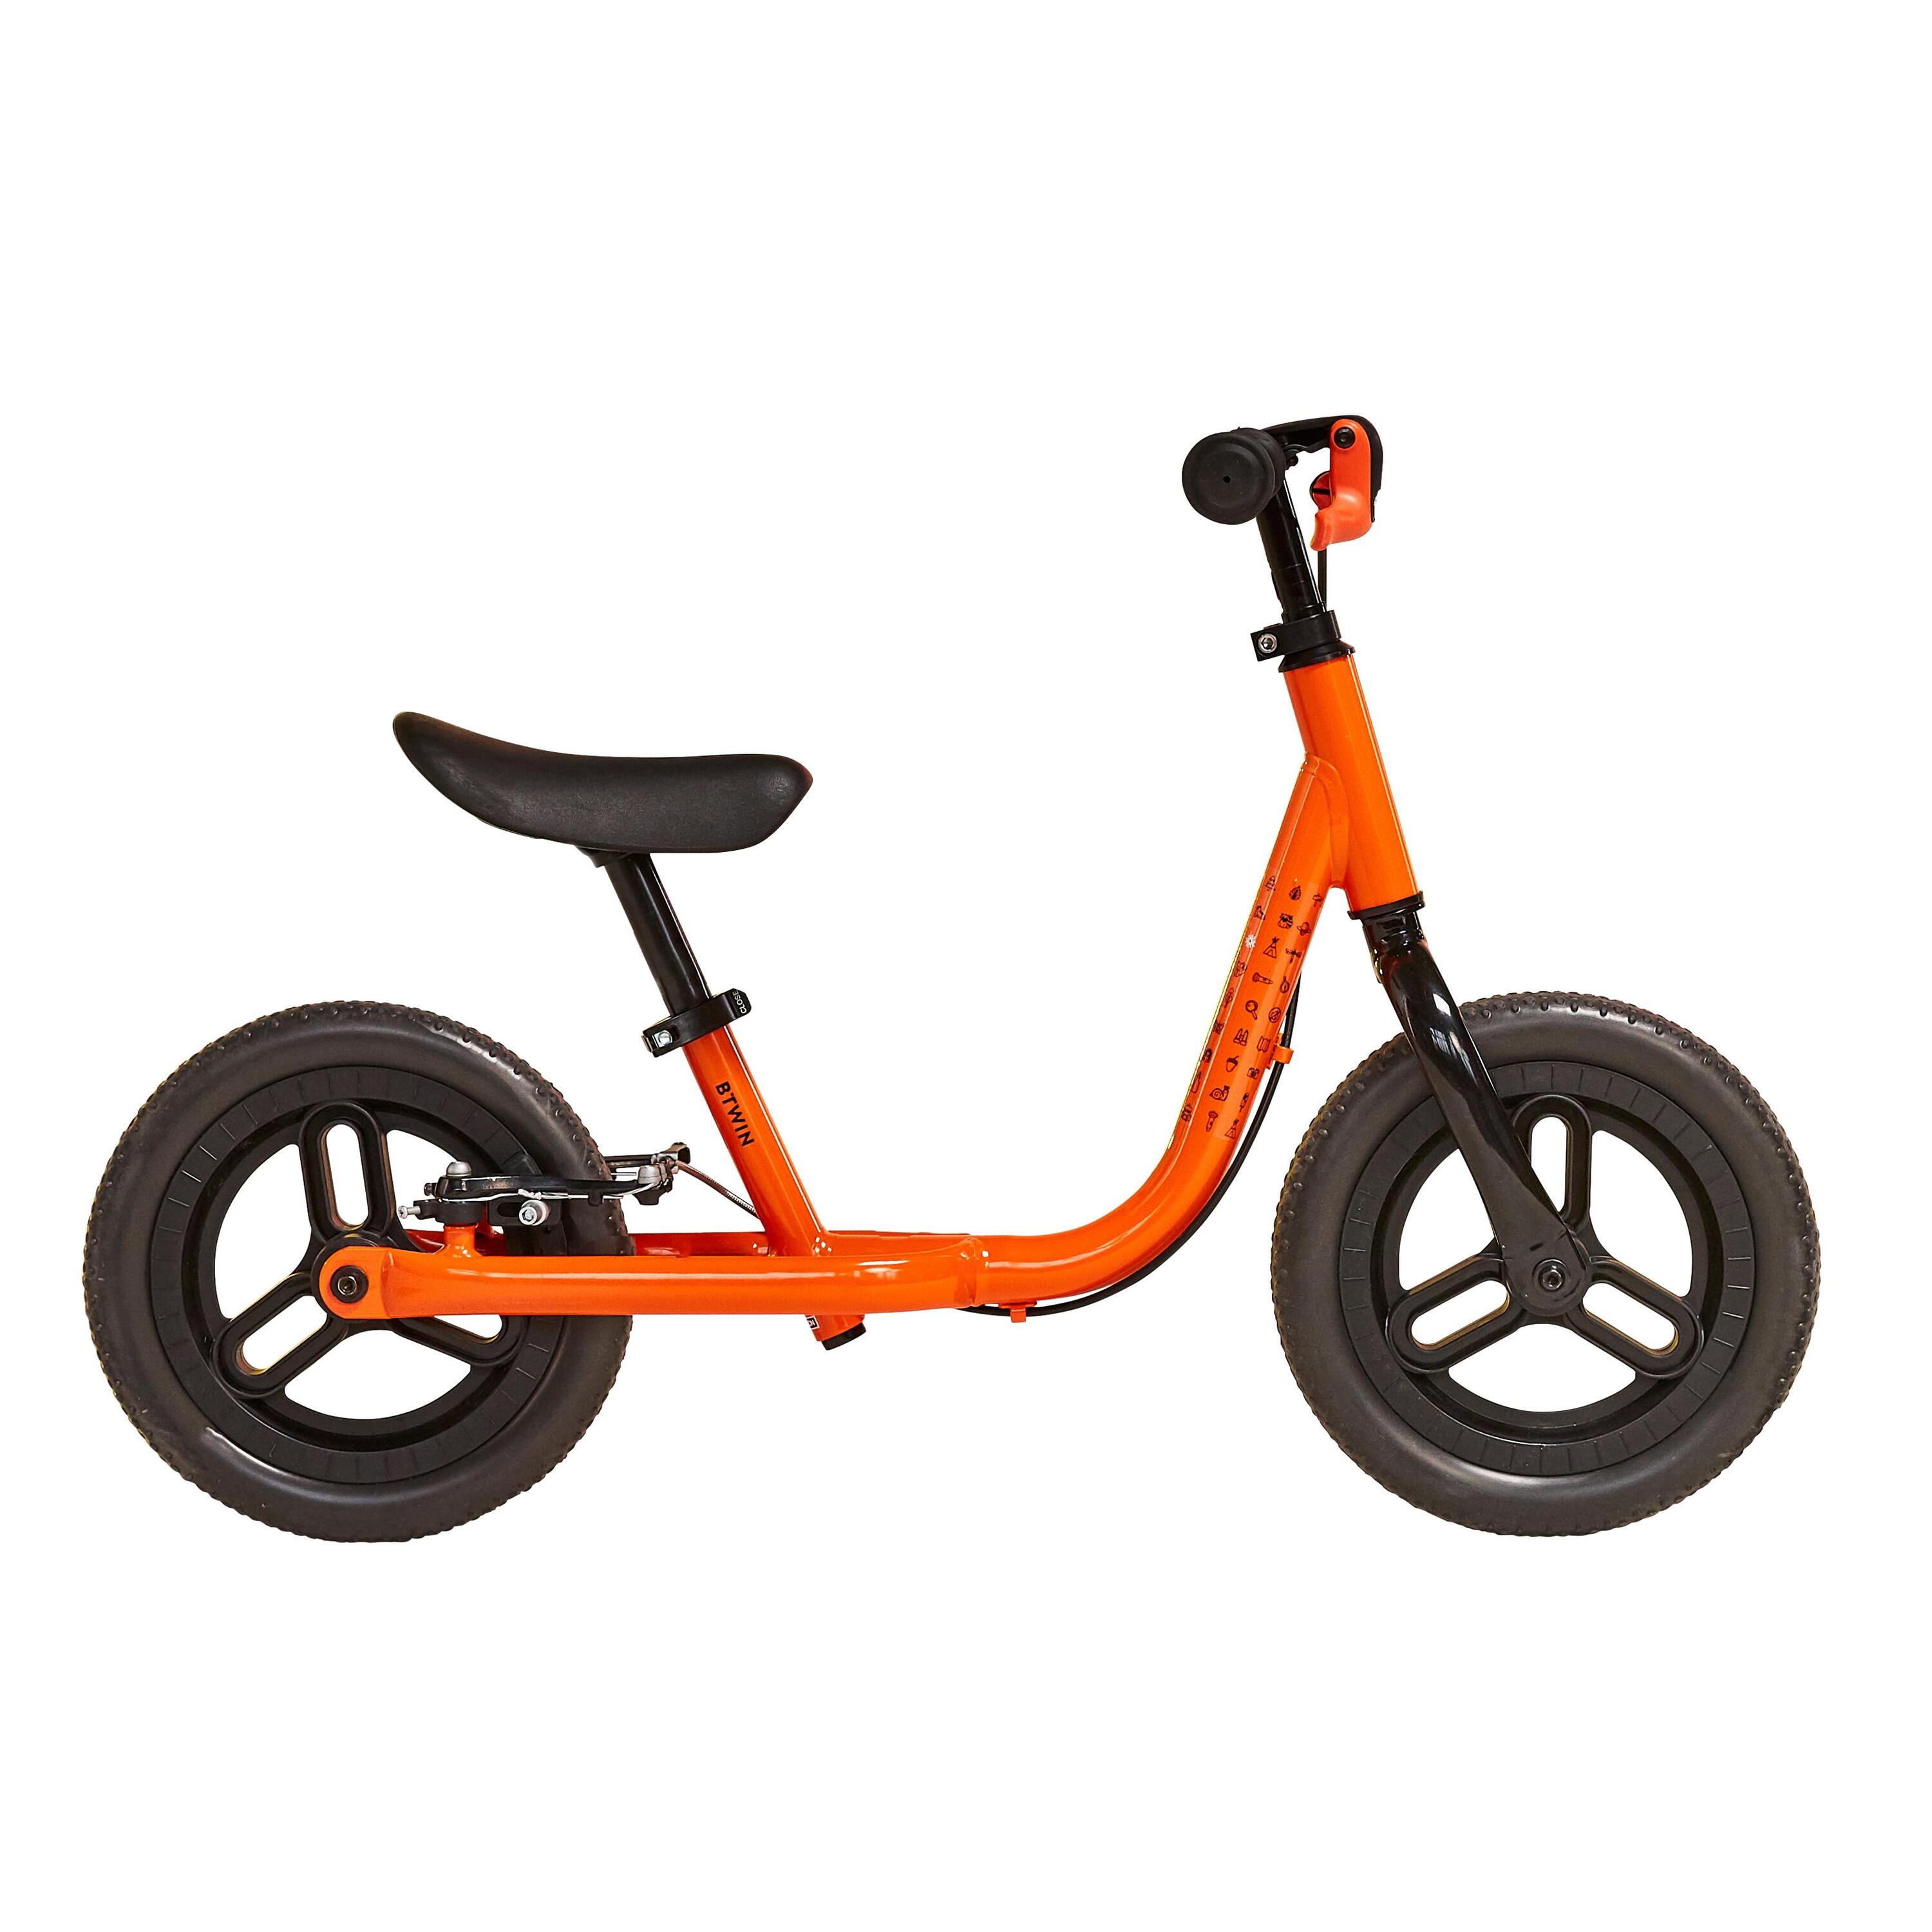 BTWIN Kids' 10" Balance Bike Runride 500 - Orange/Black